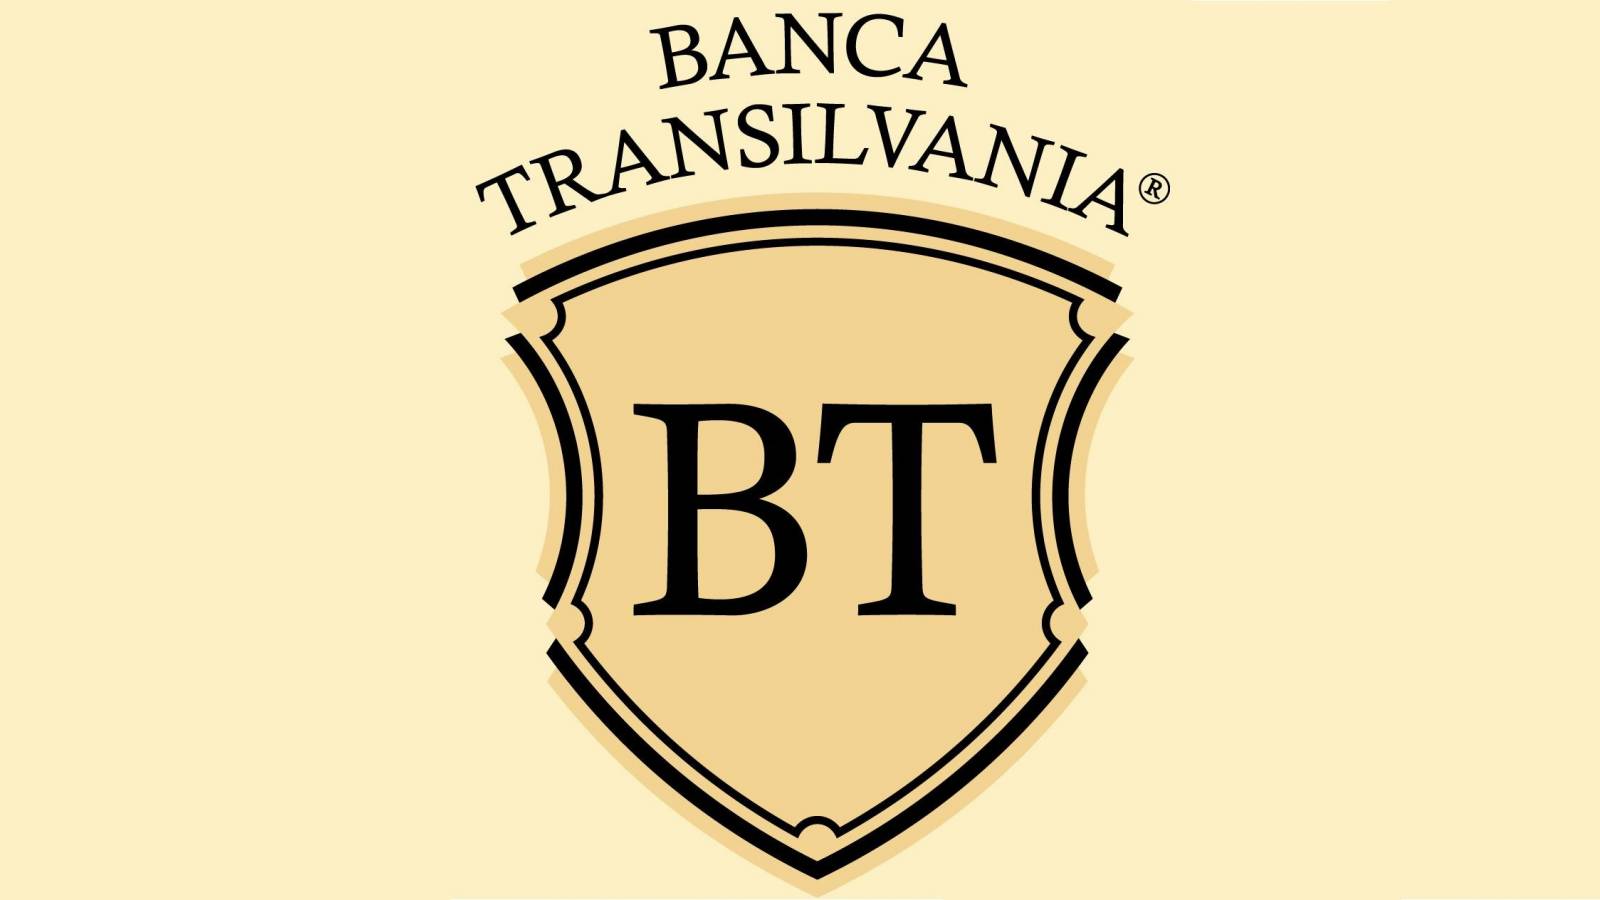 BANK Transilvania vibrationer